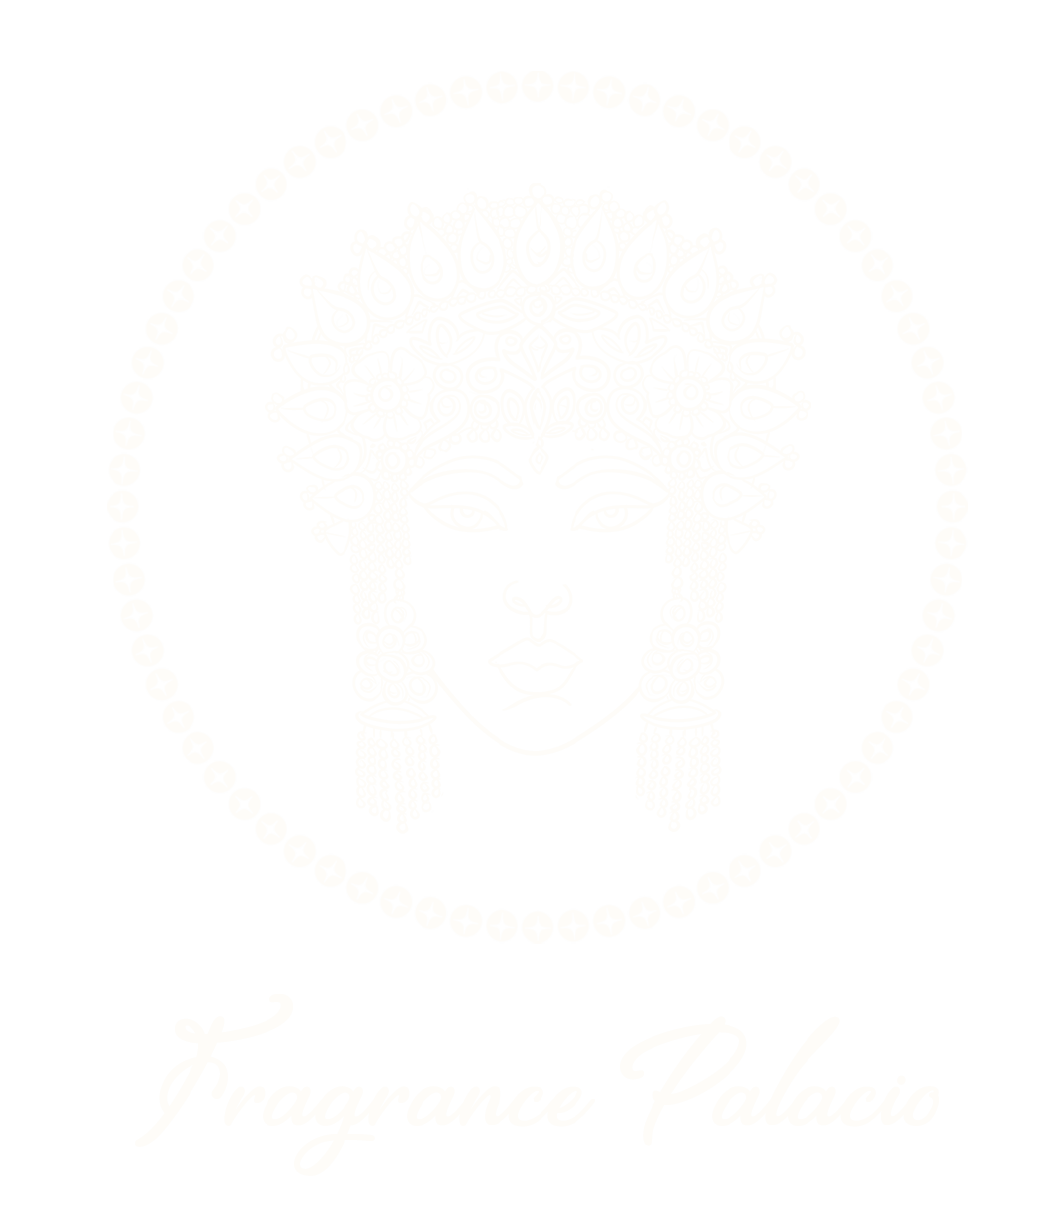 Fragrance Palacio